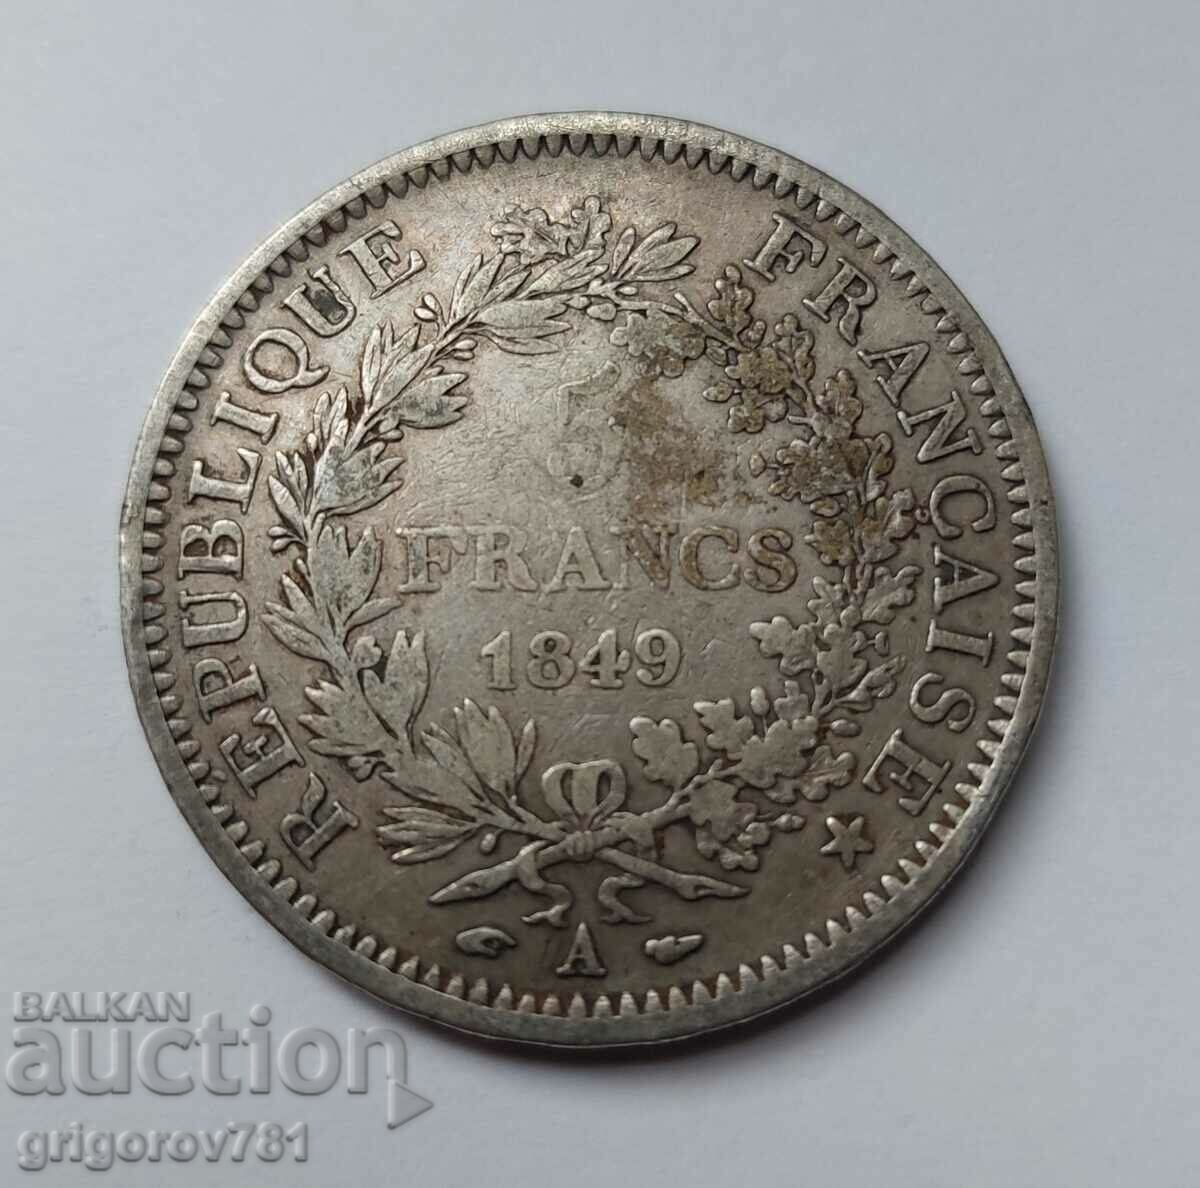 5 Francs Silver France 1849 A - Silver Coin #14